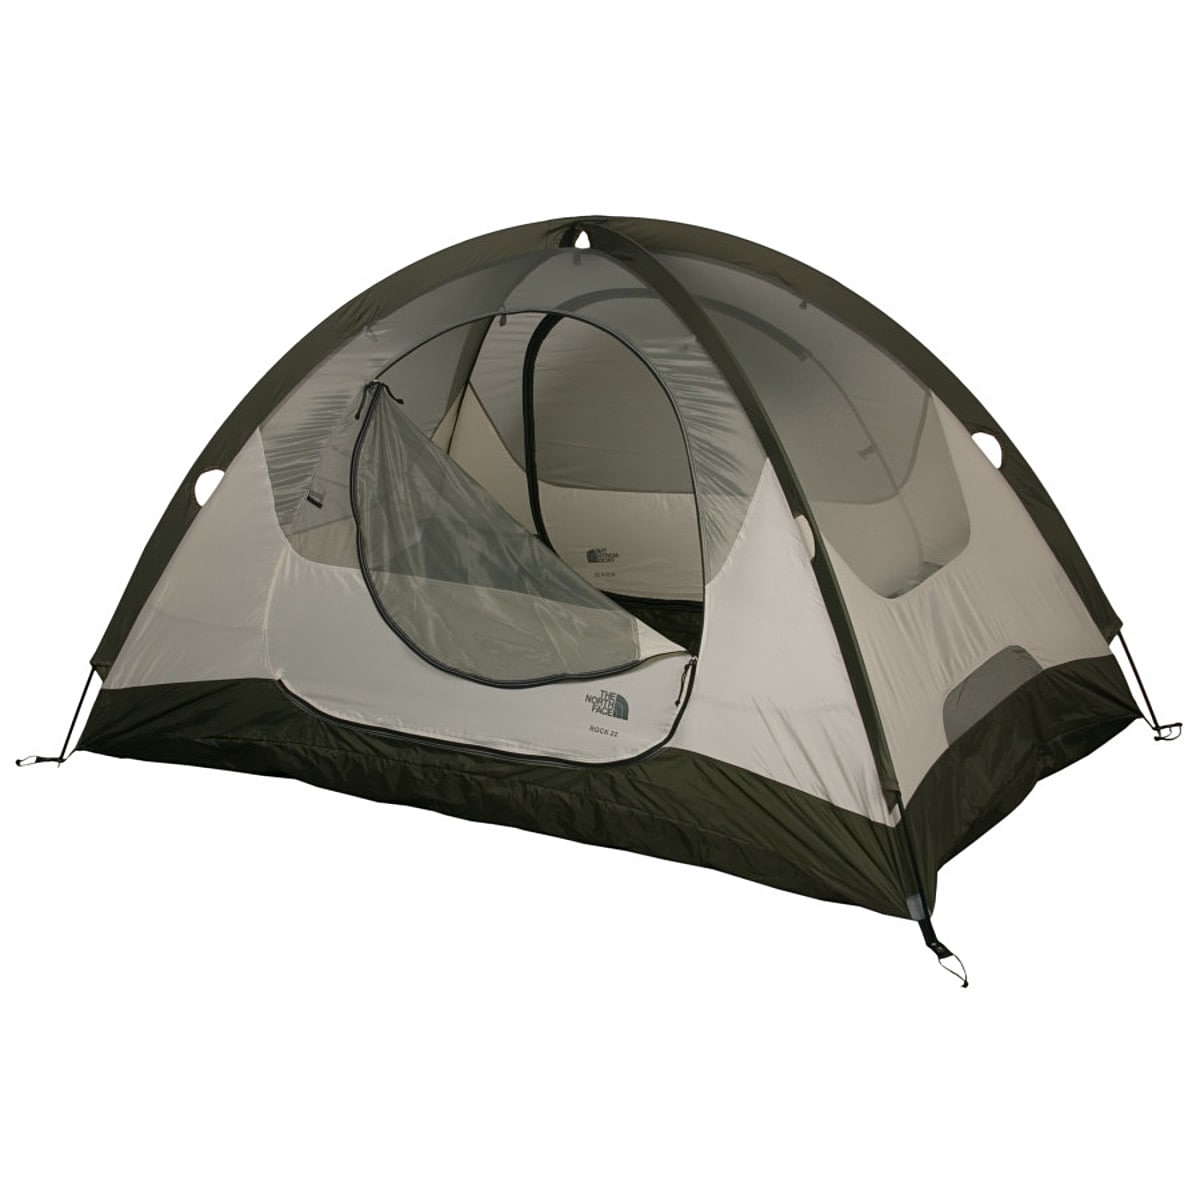 de elite stoom Beroep The North Face Rock 22 Tent - 2-Person 3-Season - Hike & Camp